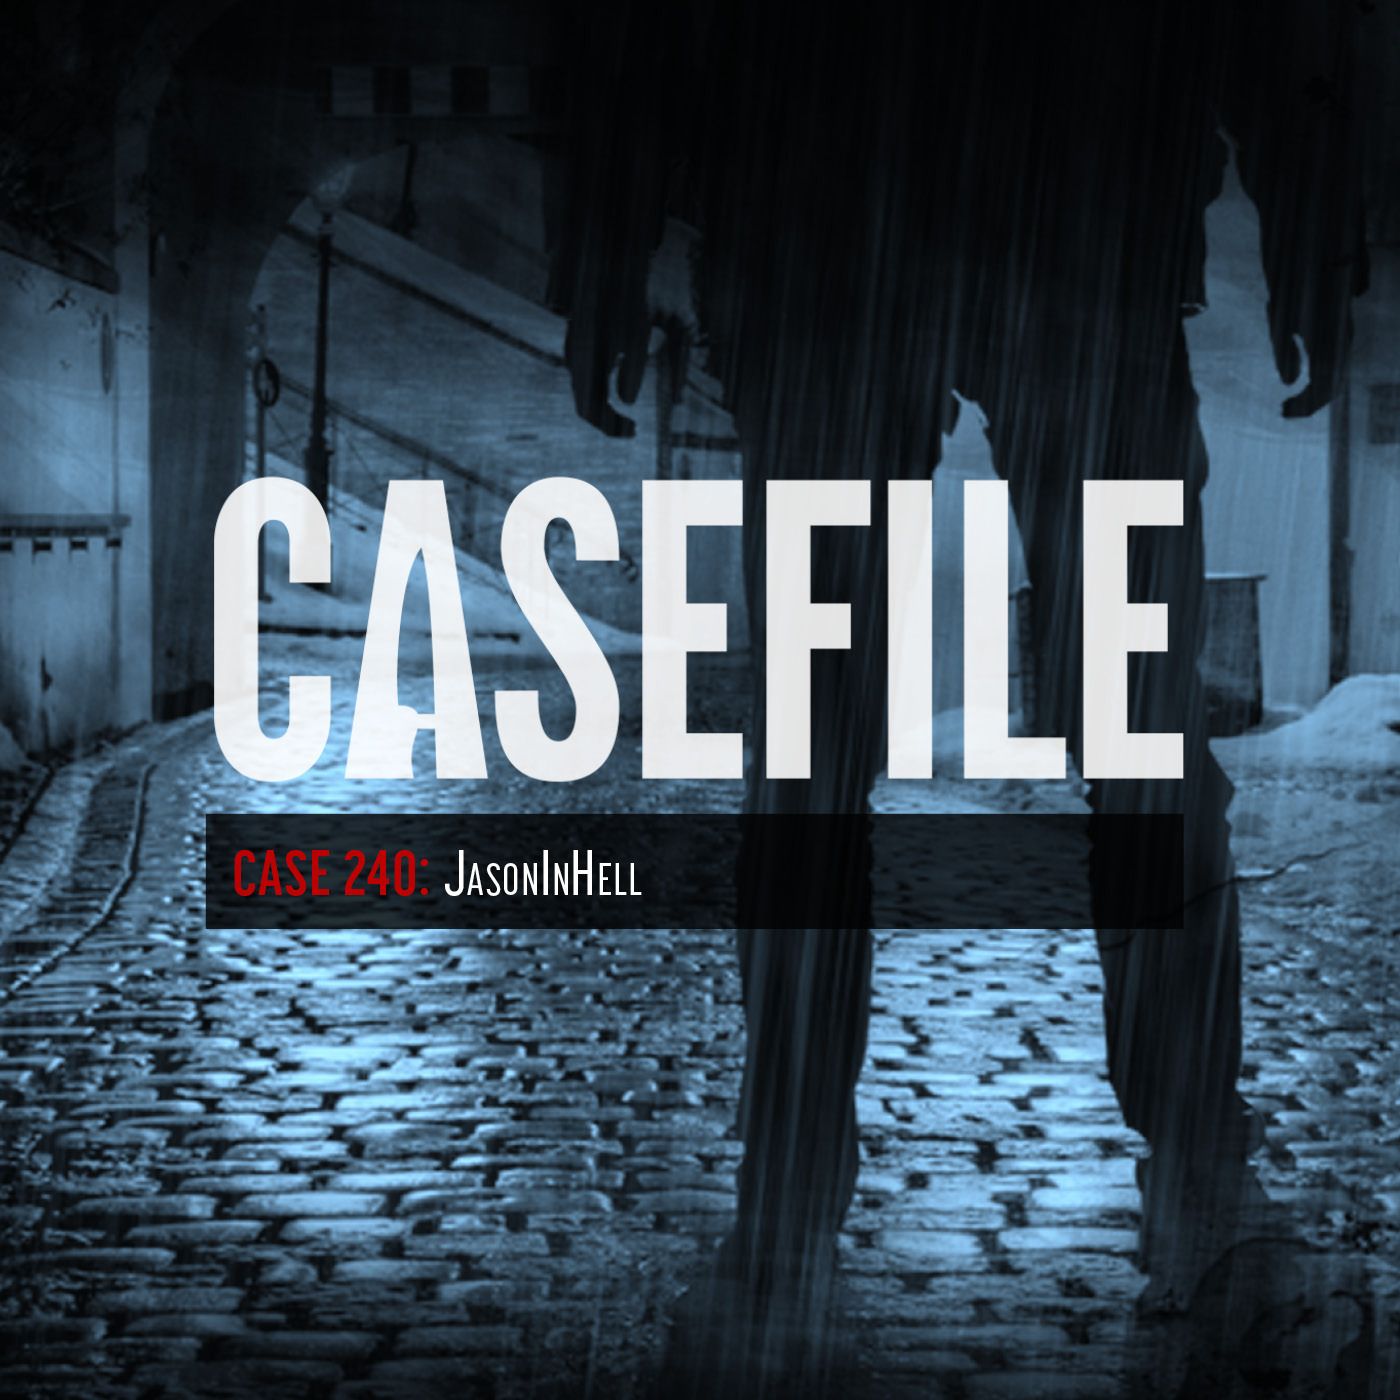 Case 240: JasonInHell